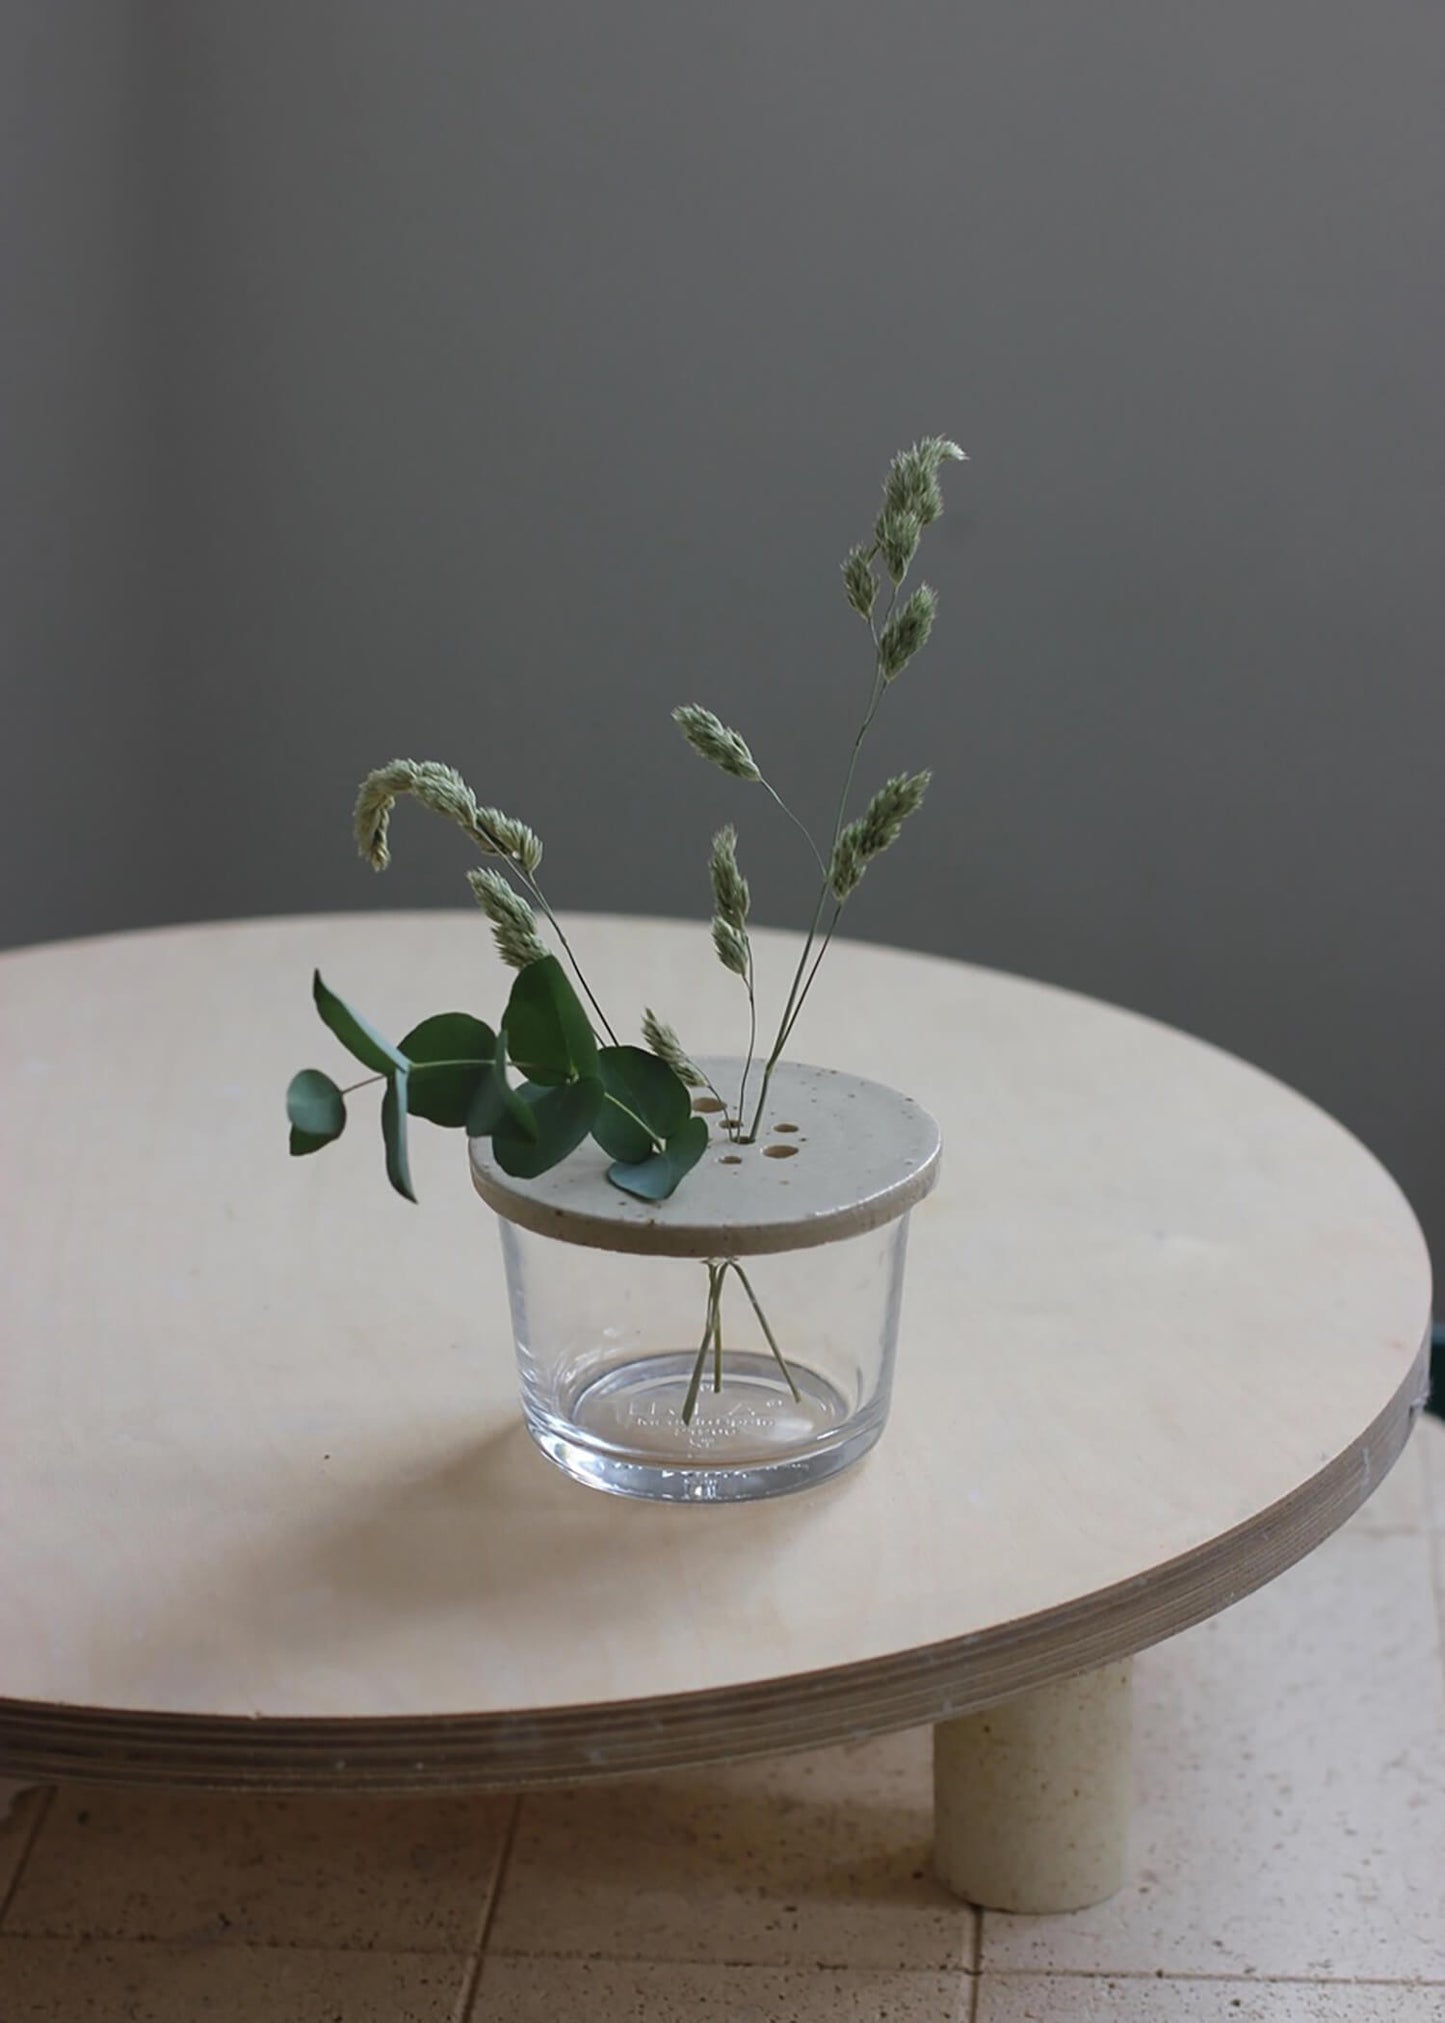 Stylish ceramic flower stem holder for a jar